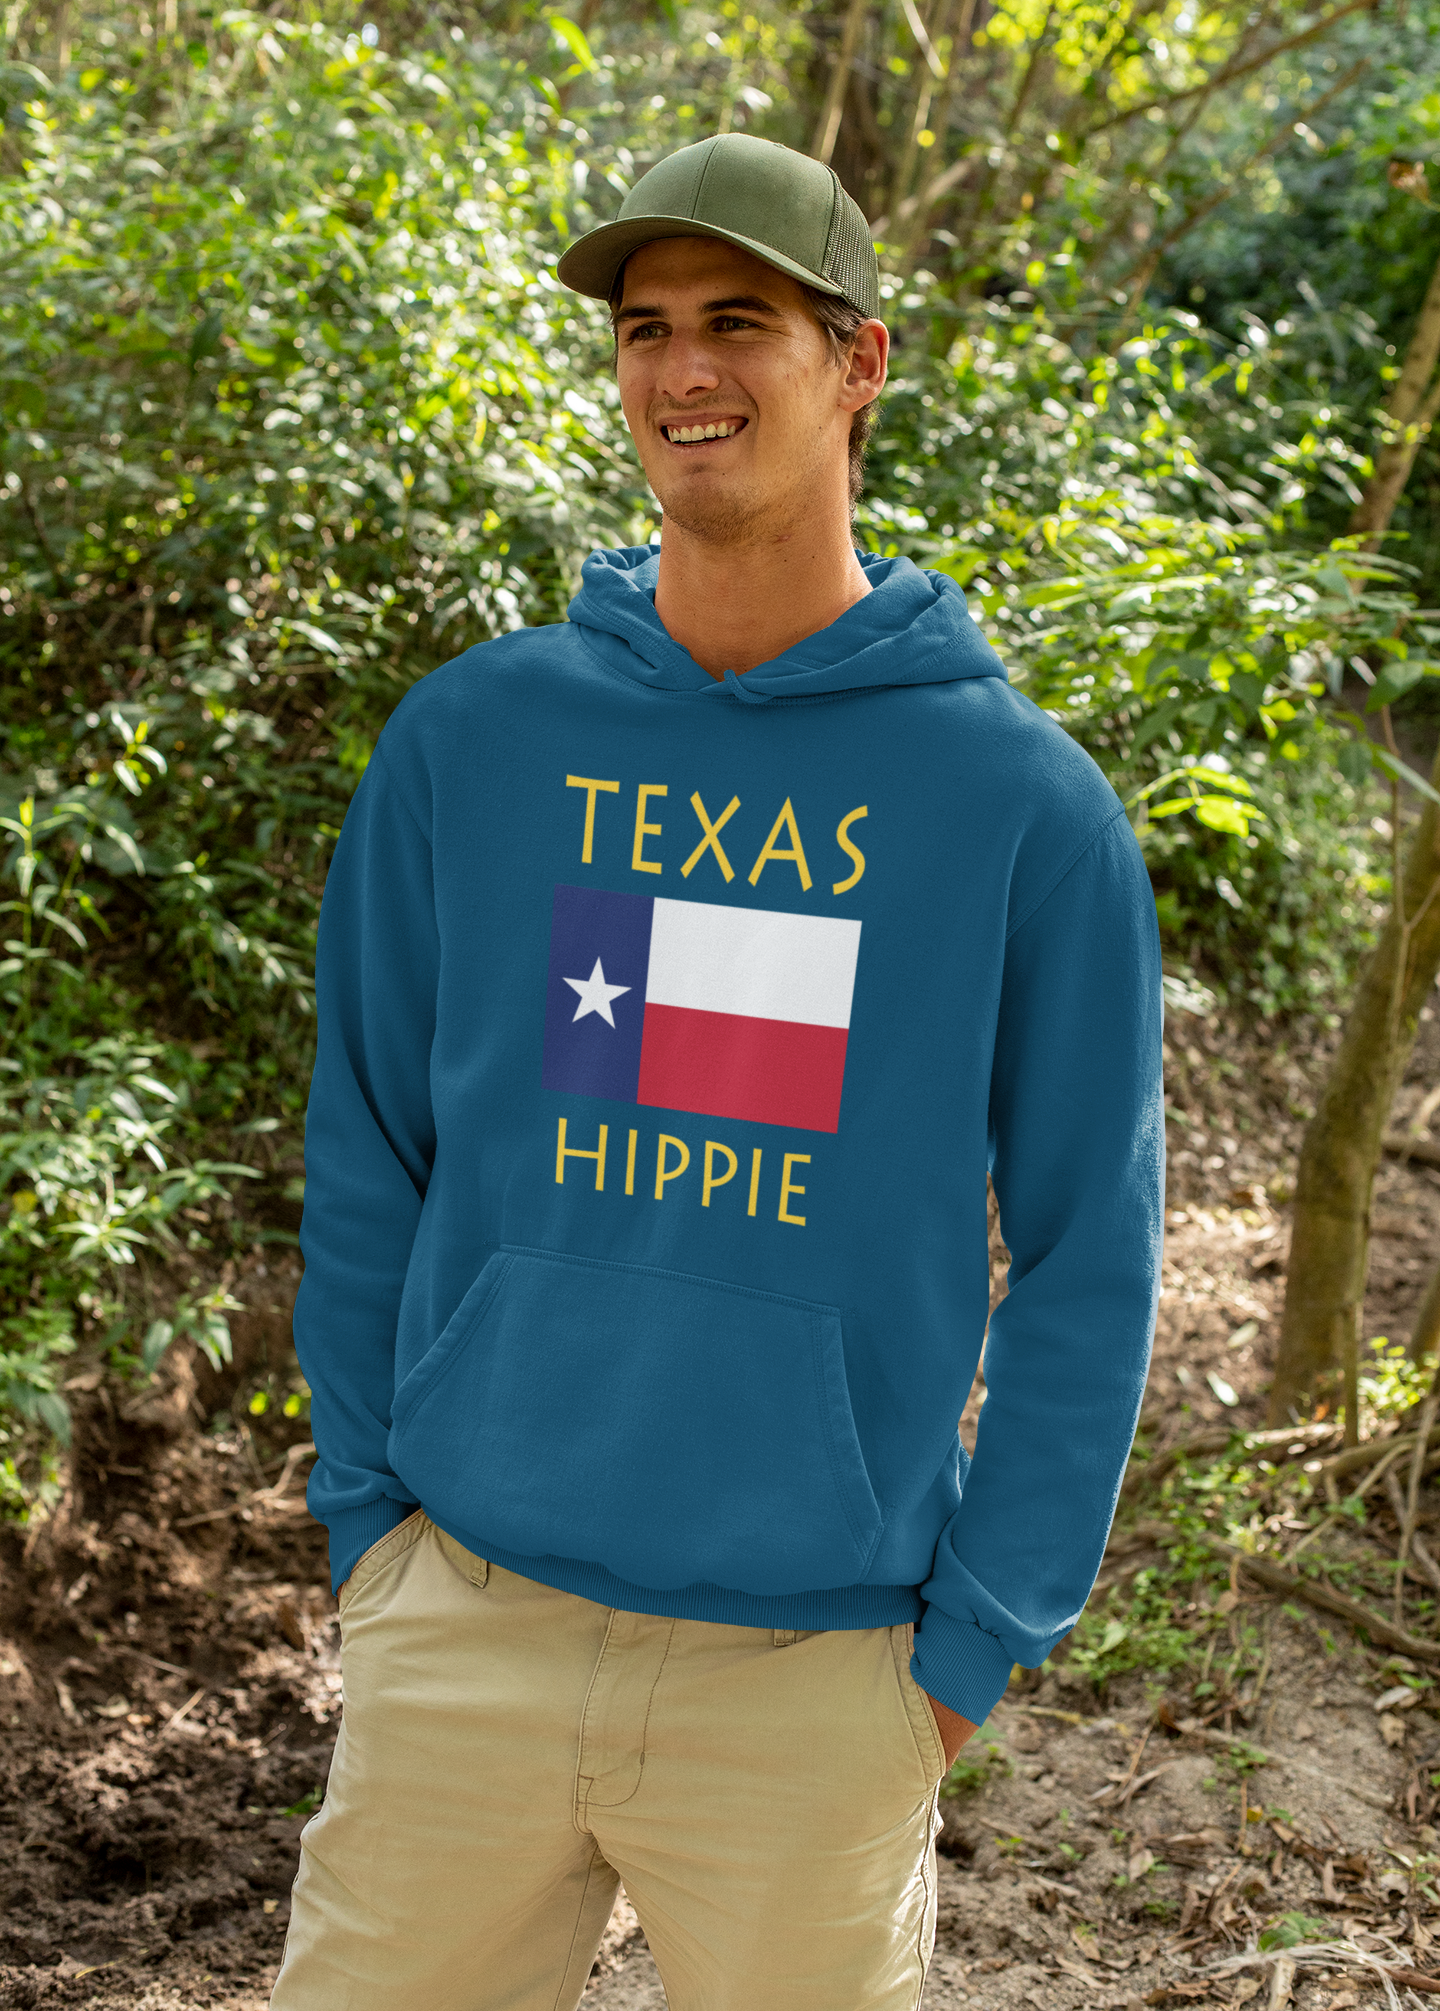 Texas Flag Hippie™ Unisex Hoodie